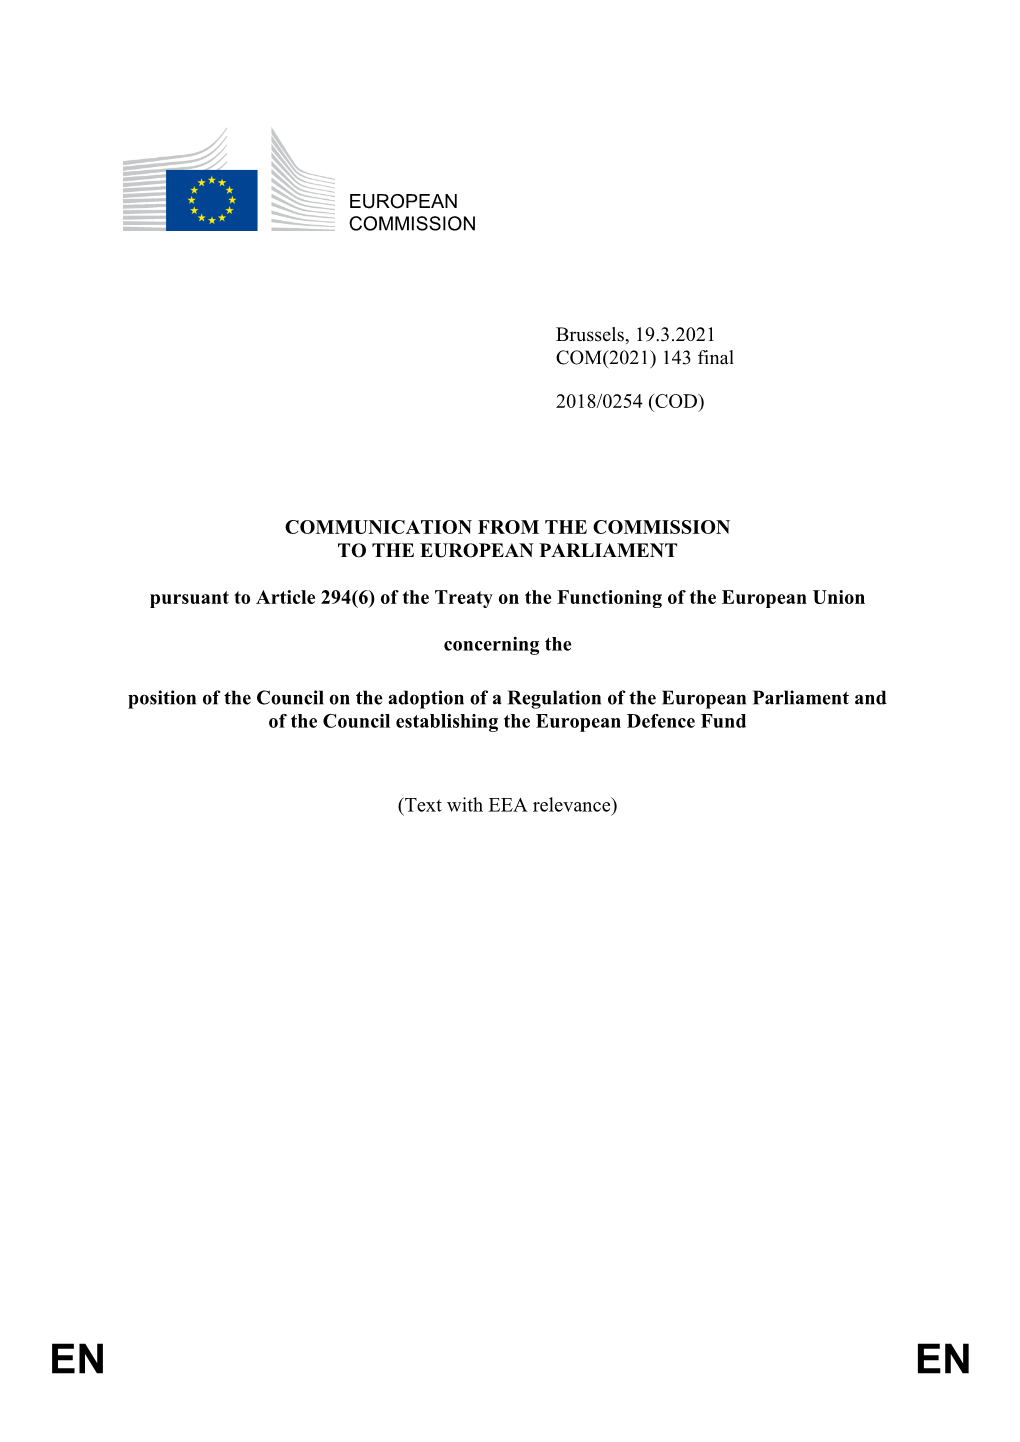 EUROPEAN COMMISSION Brussels, 19.3.2021 COM(2021) 143 Final